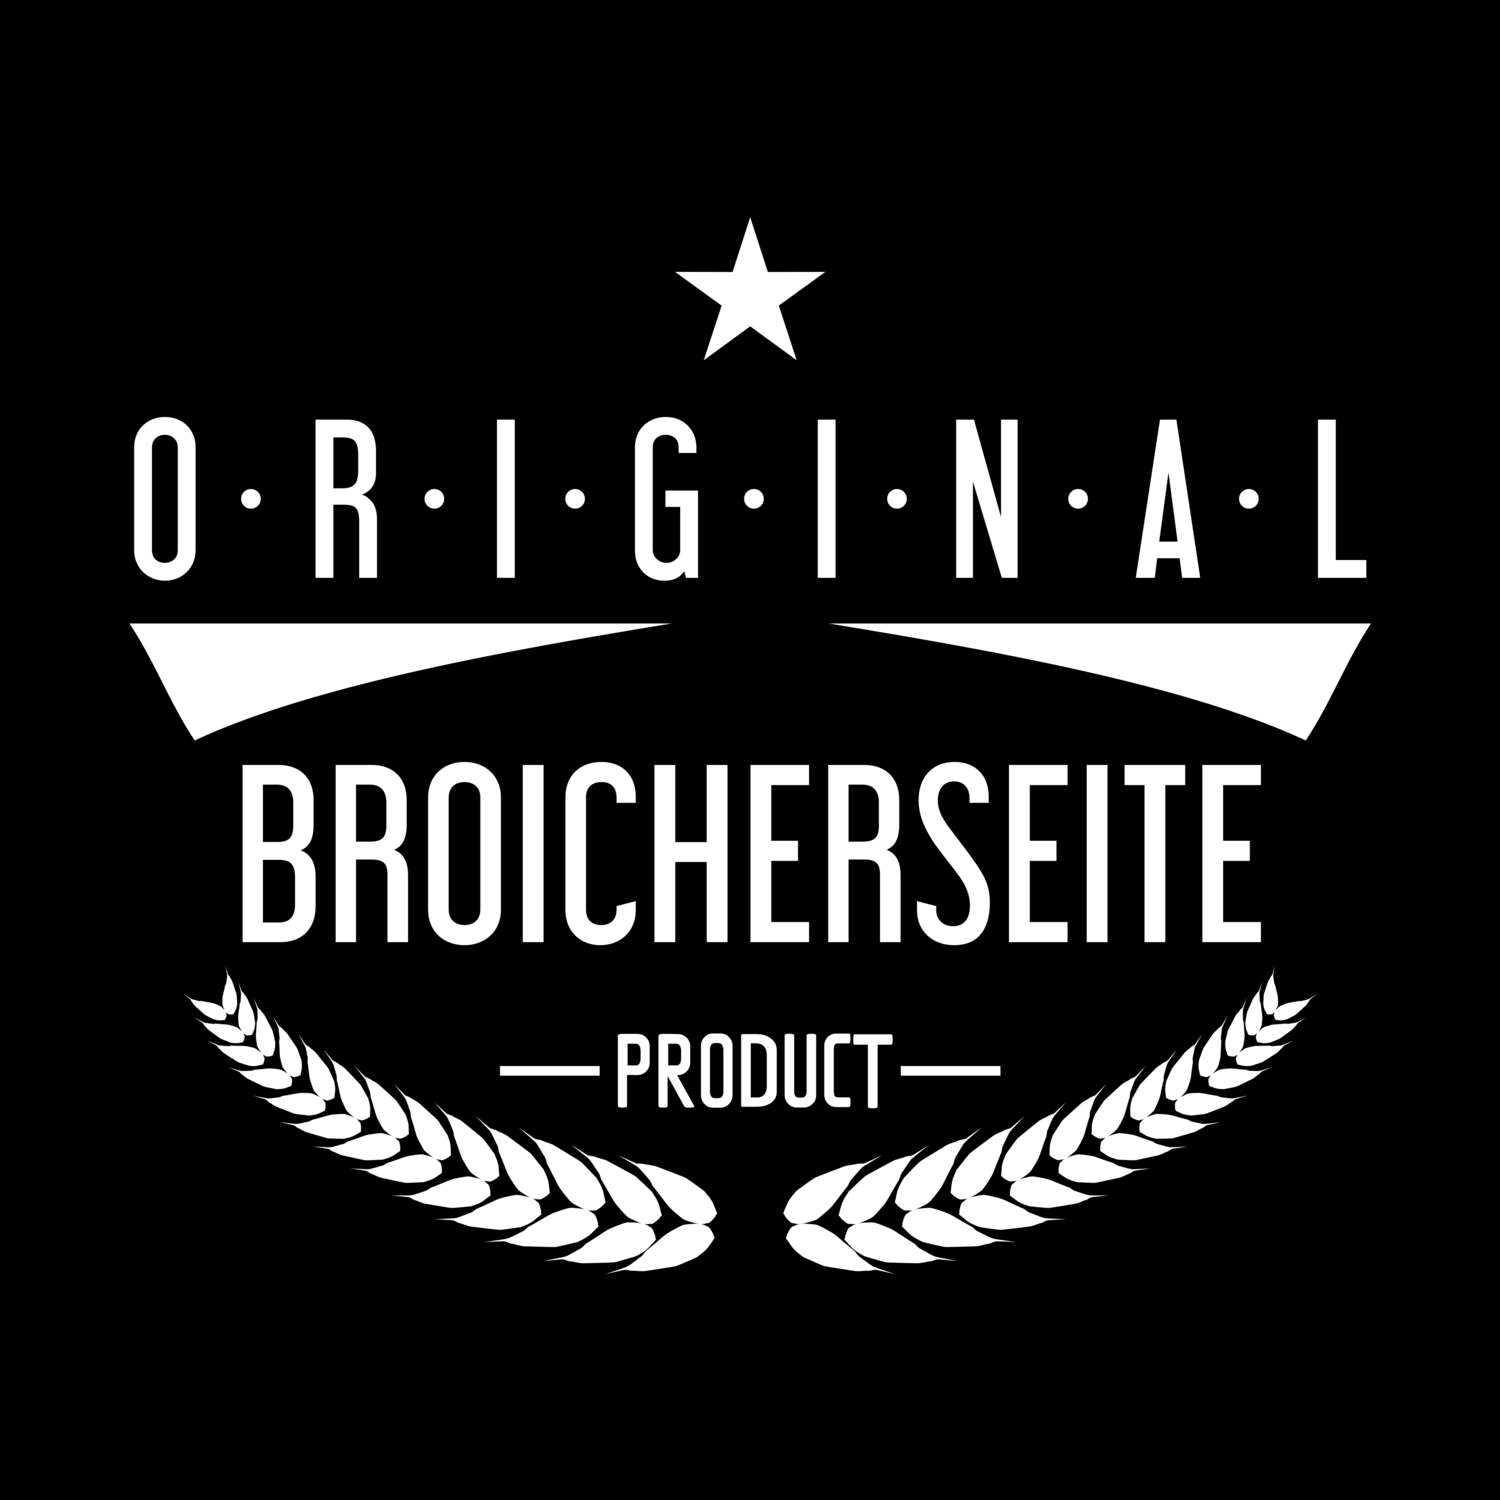 Broicherseite T-Shirt »Original Product«